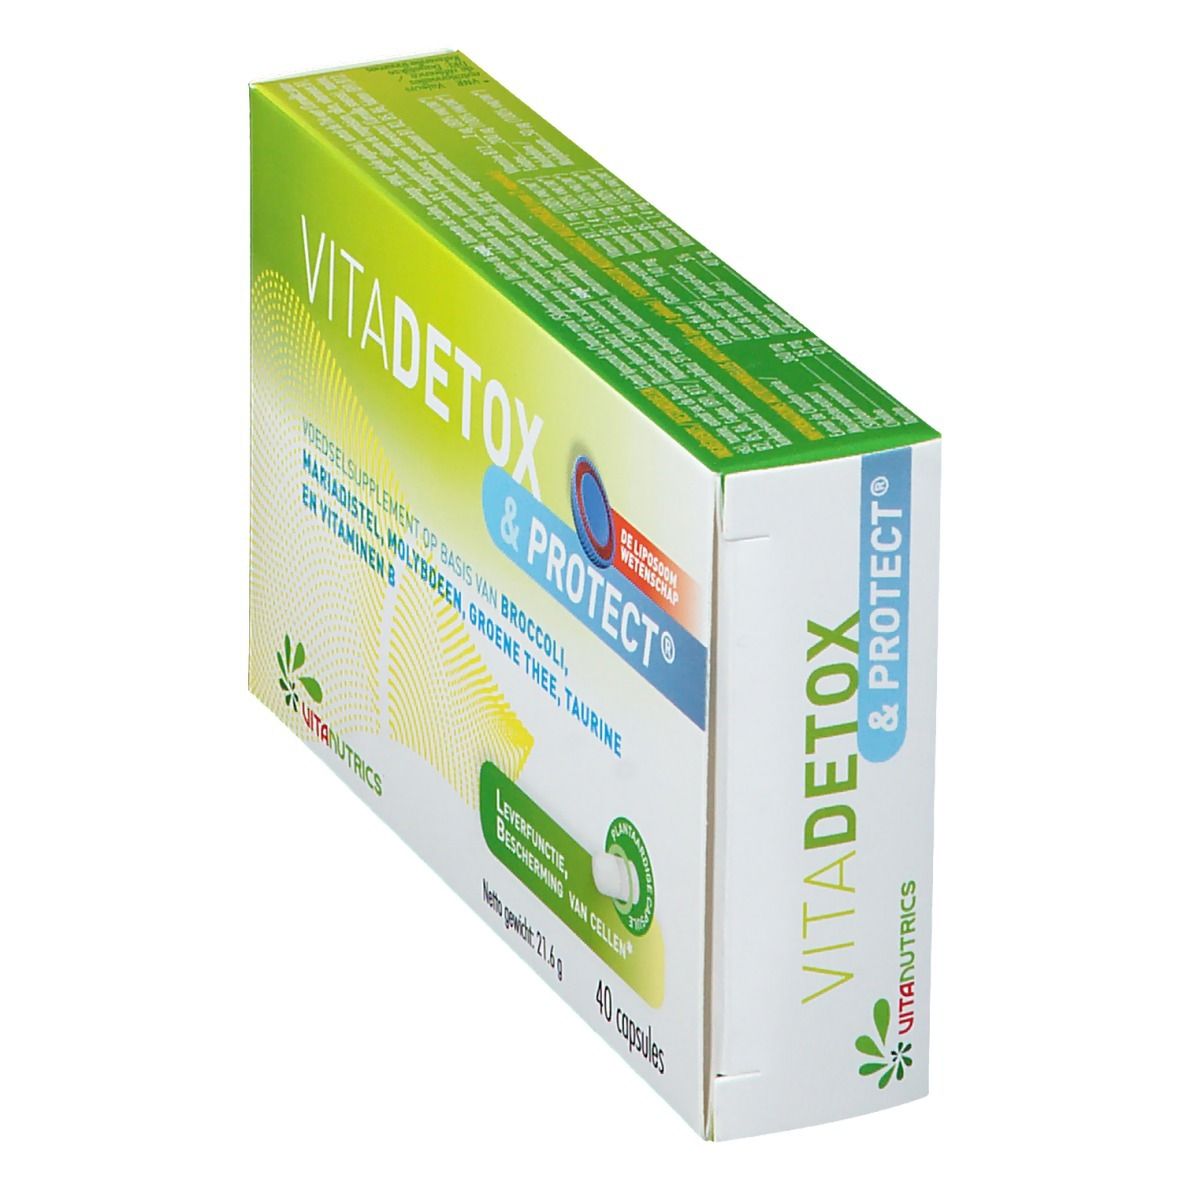 Vitanutrics VitaDetox & Protect®